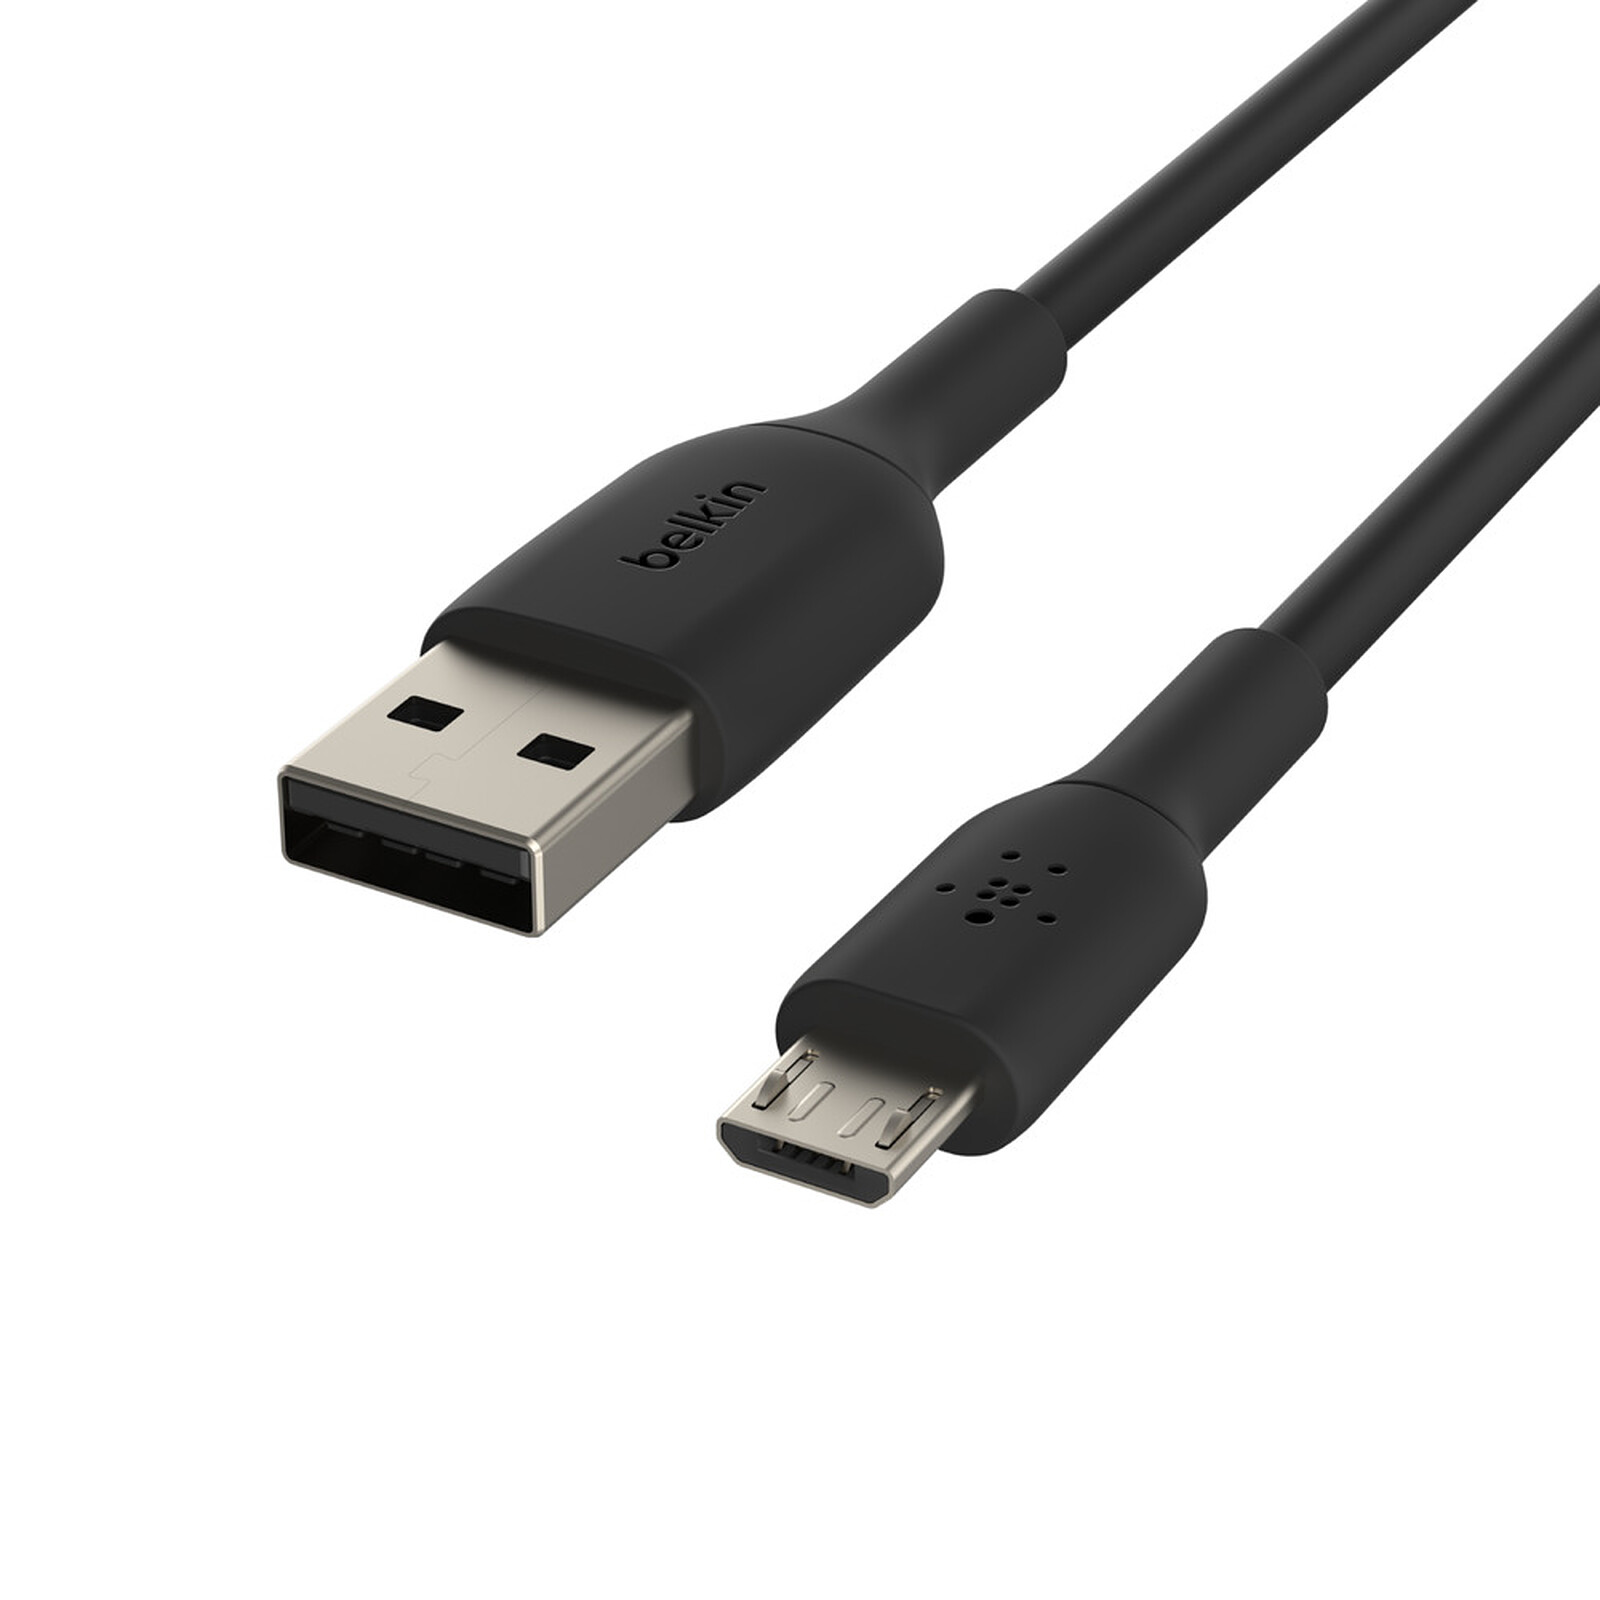 Cable USB-A a Micro-USB Belkin (negro) - 1m Cable y Adaptador Belkin en LDLC